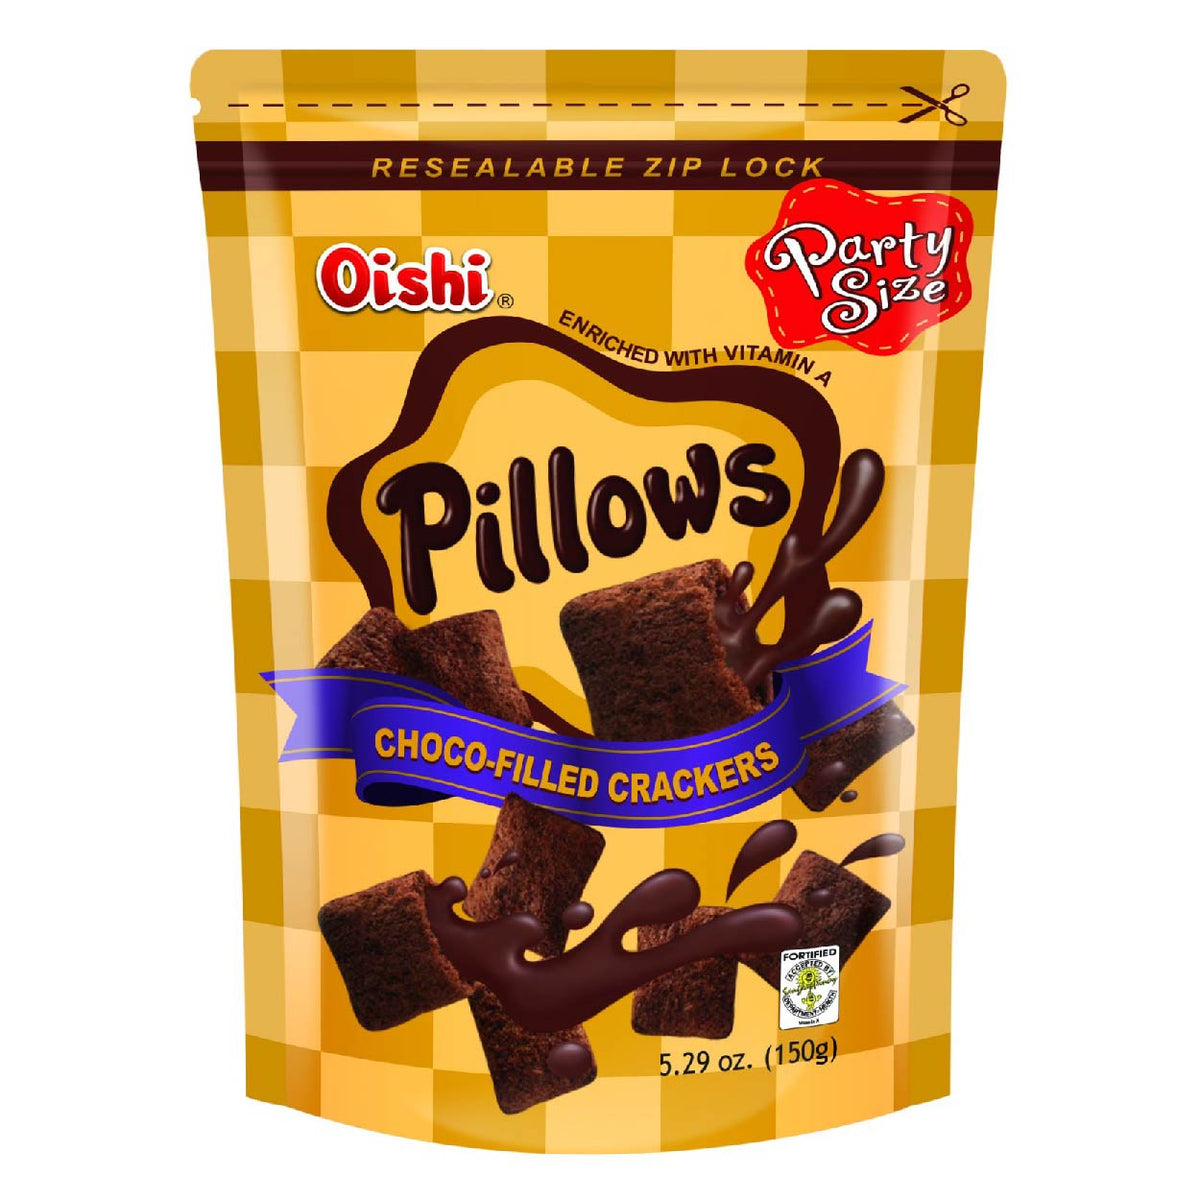 ASMR Ice Cream - Oishi Pillows Chocolate Flavor Ice Cream Rolls 